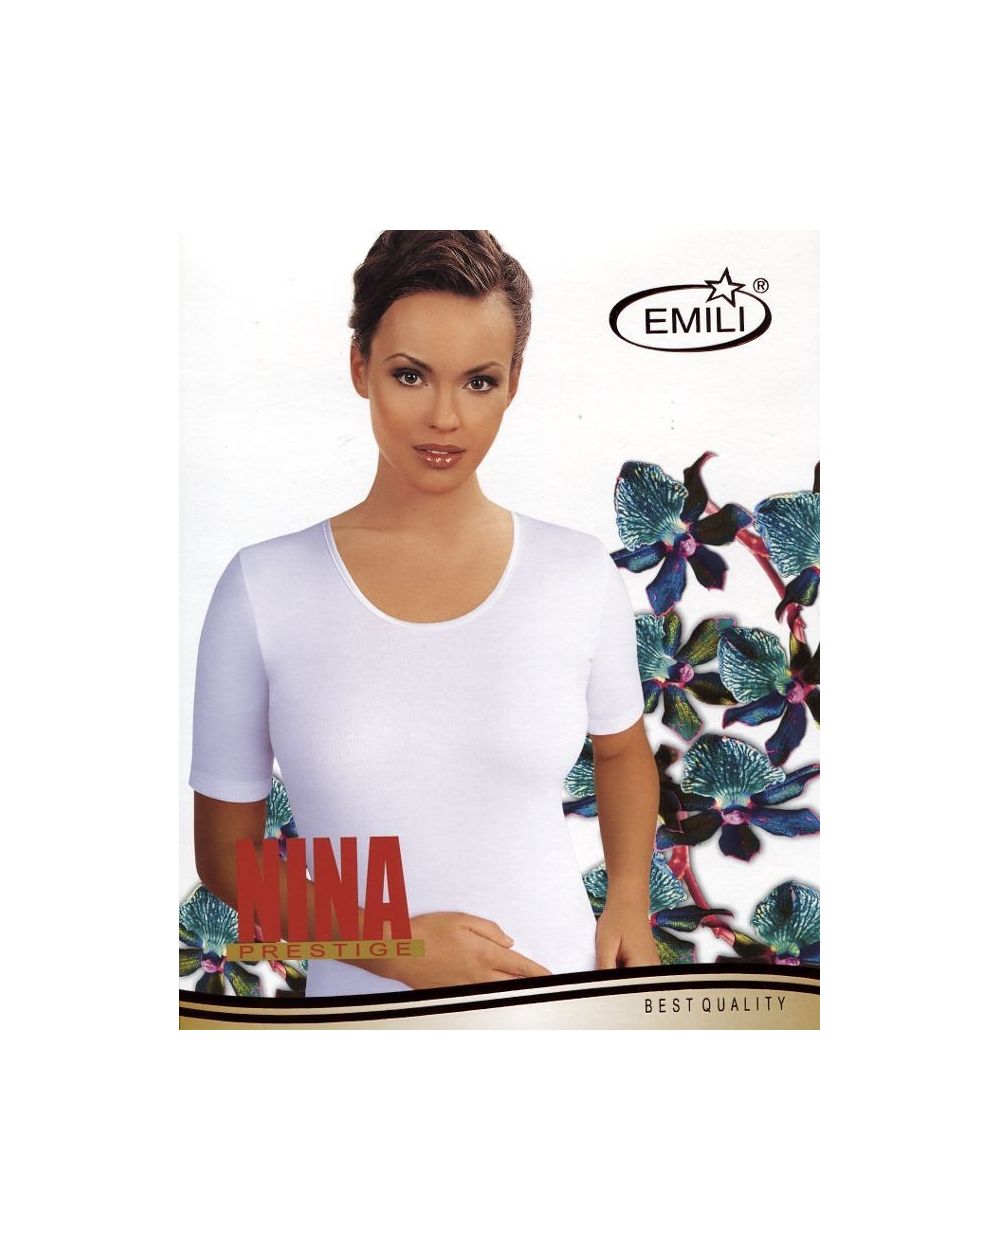 Emila Nina T-shirt white 2XL